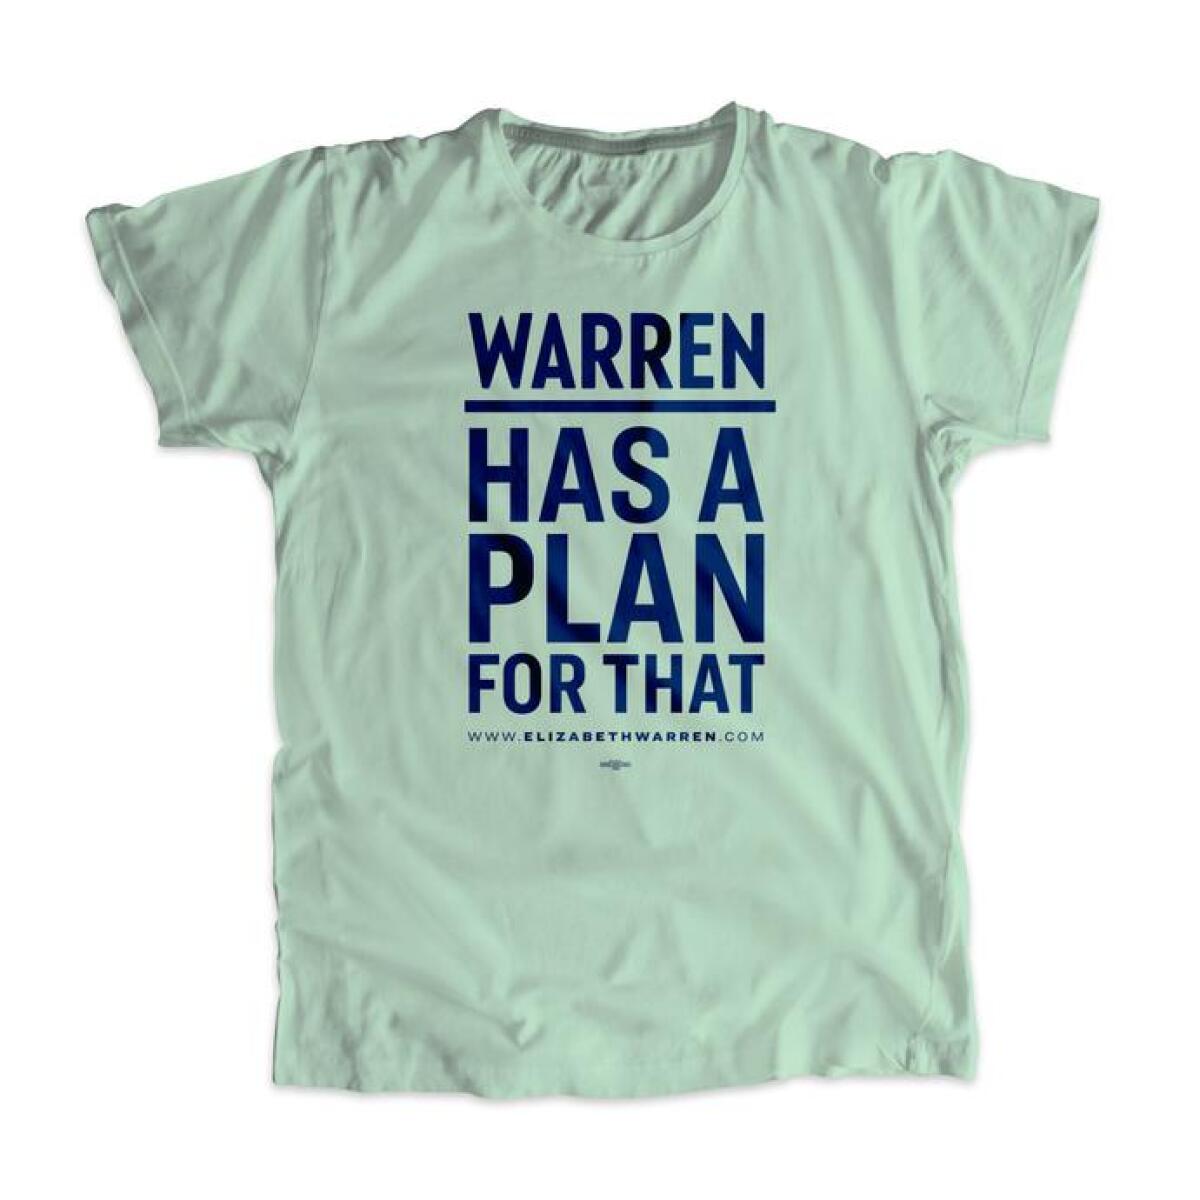 Elizabeth Warren's "Warren Has a Plan for That" campaign T-shirt 